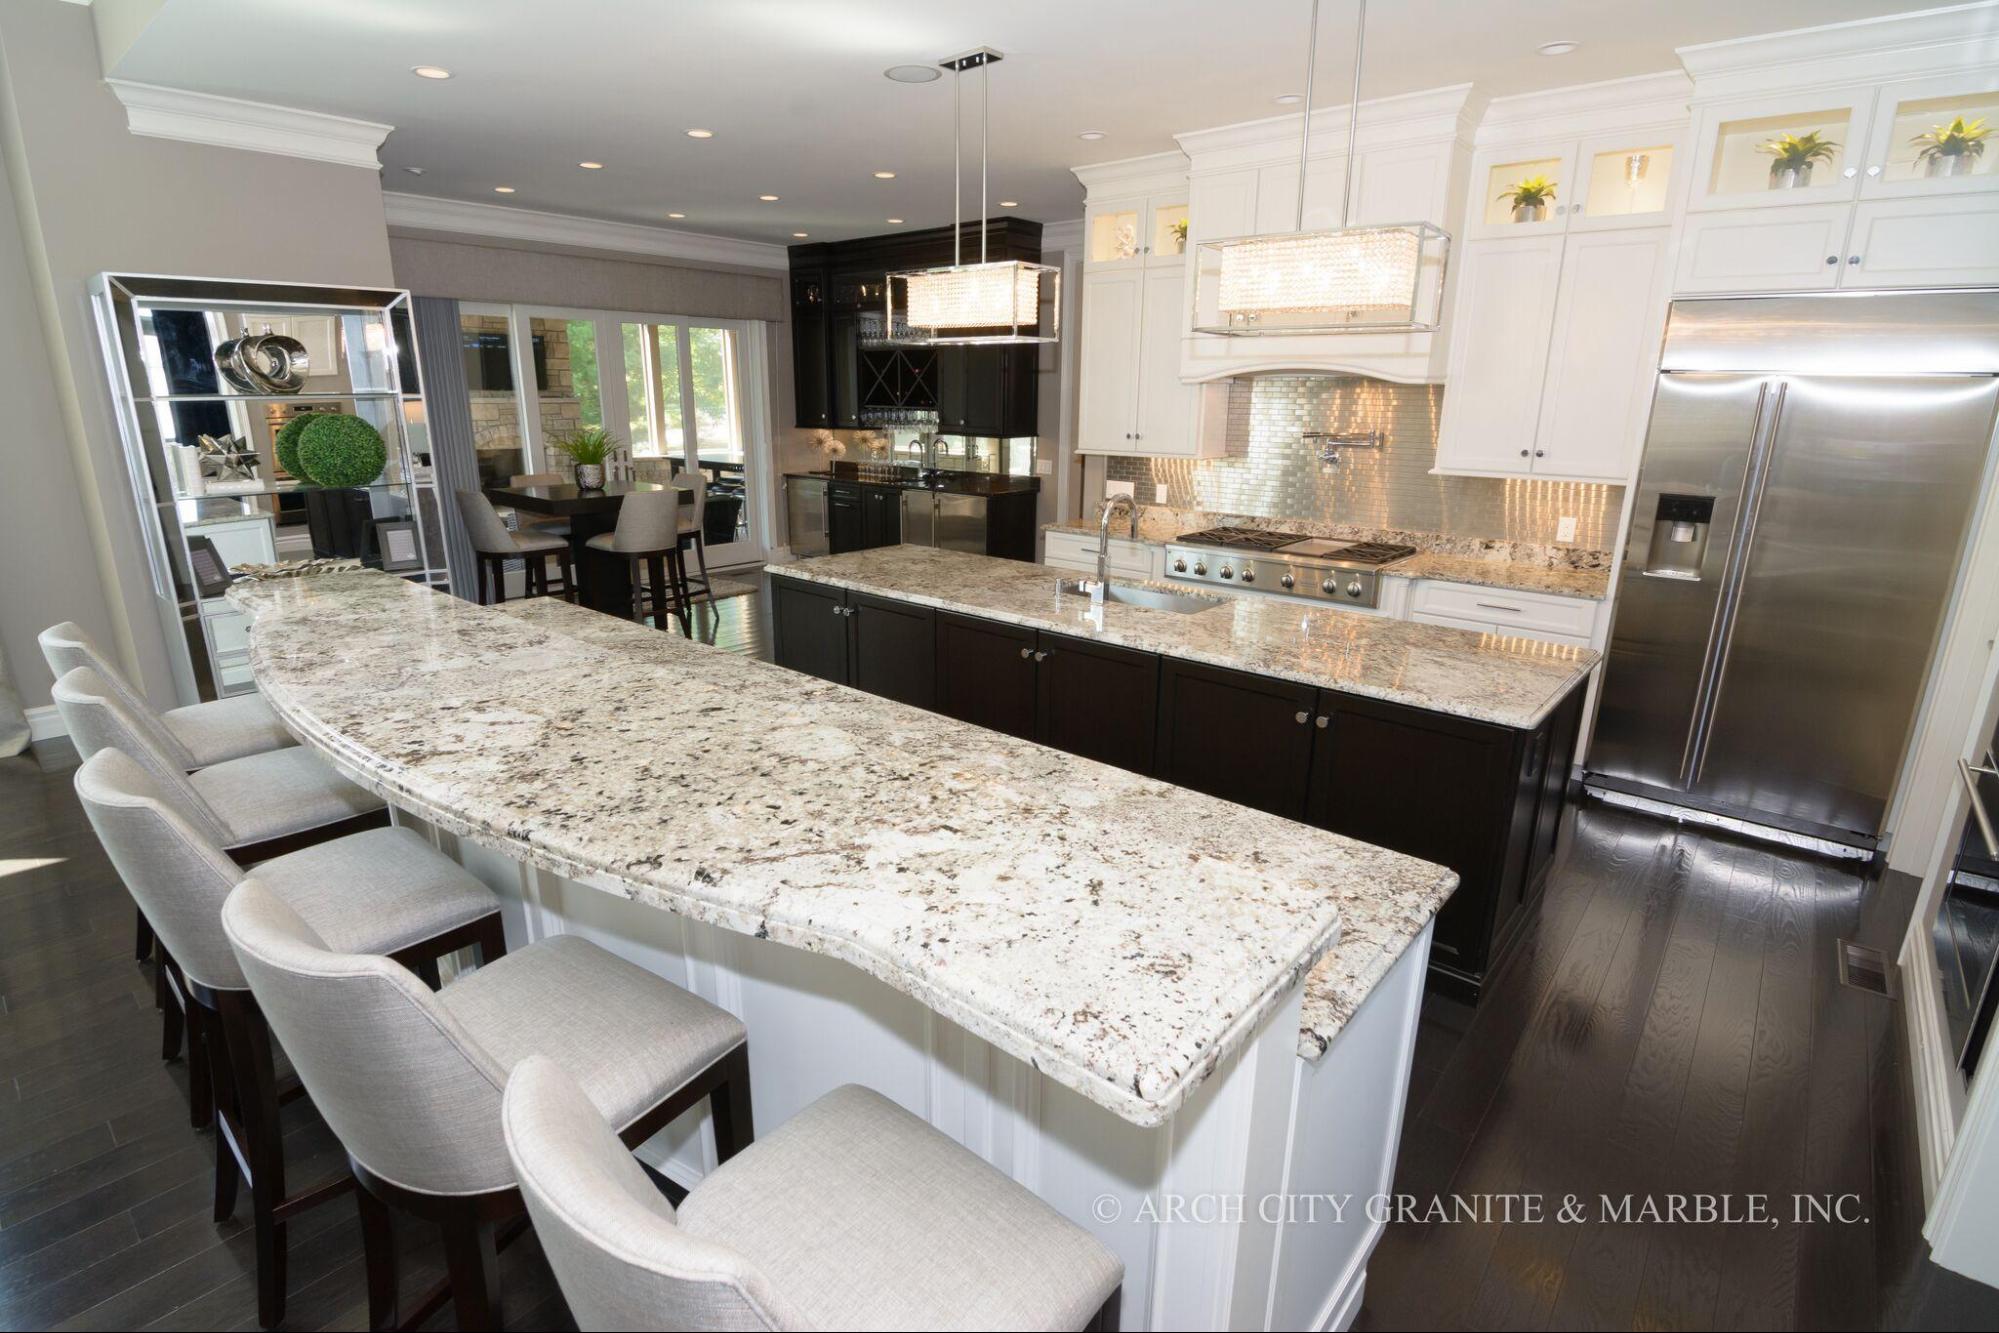 Alaska White Granite - An elegant white granite color for modern kitchen countertops